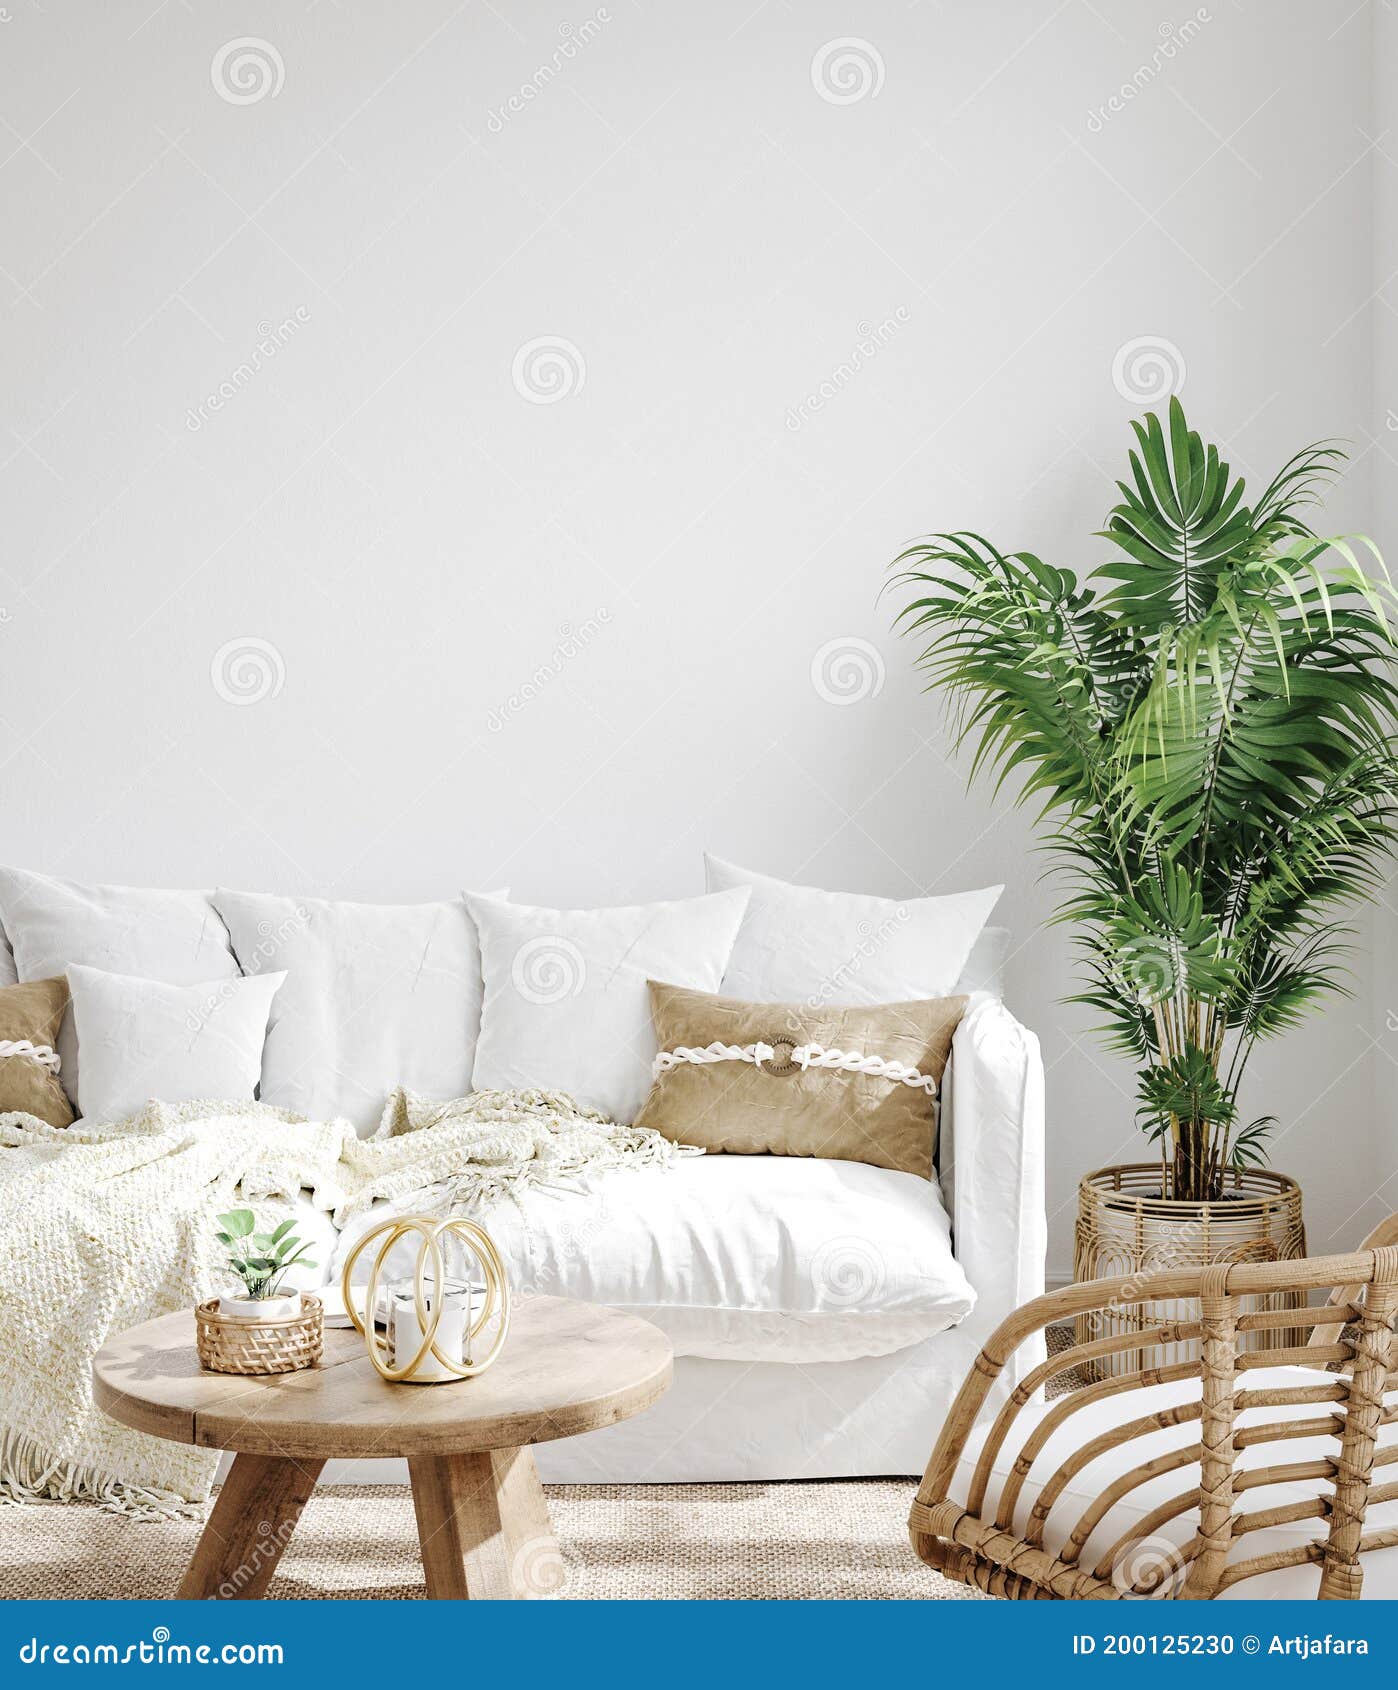 white cozy living room interior, coastal boho style